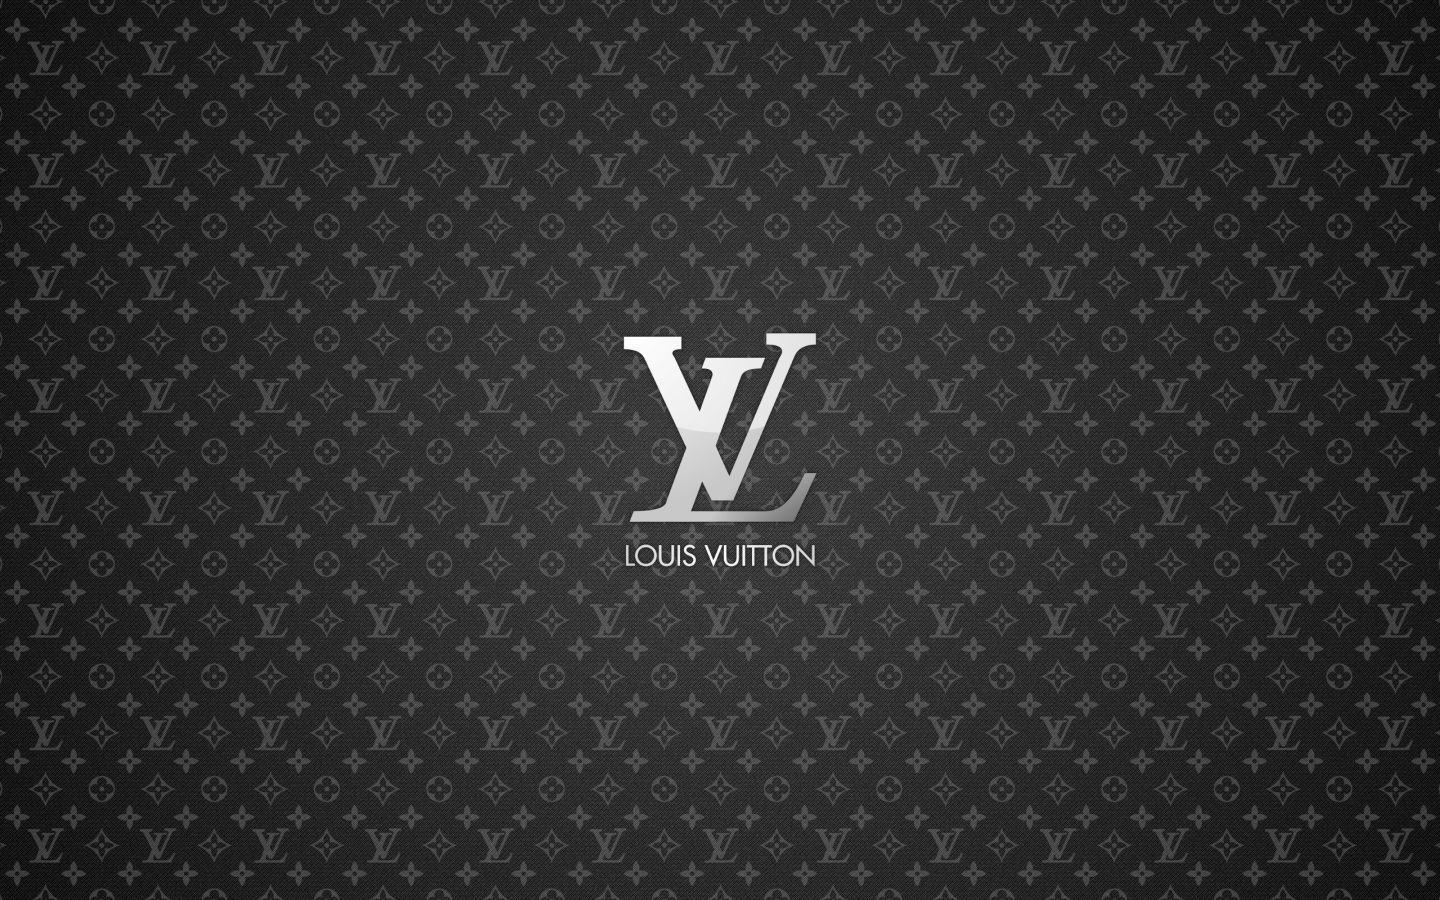 Louis Vuitton Mac Wallpaper Download Free Mac Wallpapers Download